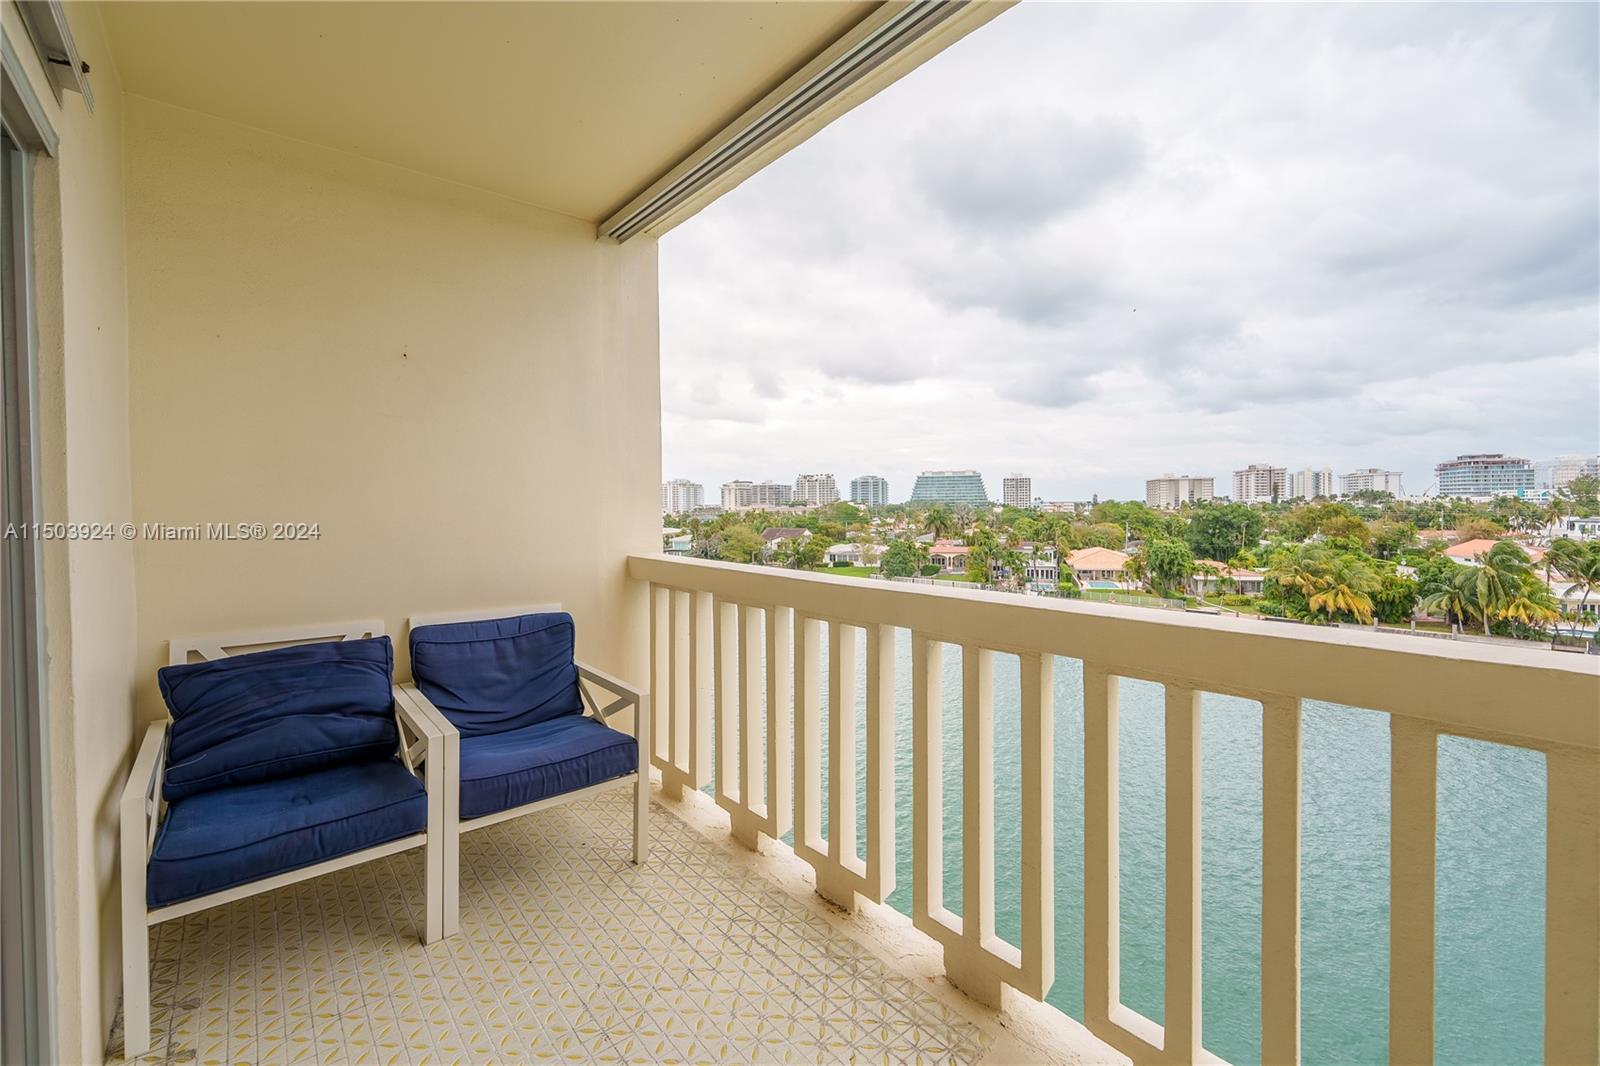 Property for Sale at 9111 E Bay Harbor Dr 6A, Bay Harbor Islands, Miami-Dade County, Florida - Bedrooms: 2 
Bathrooms: 2  - $635,000